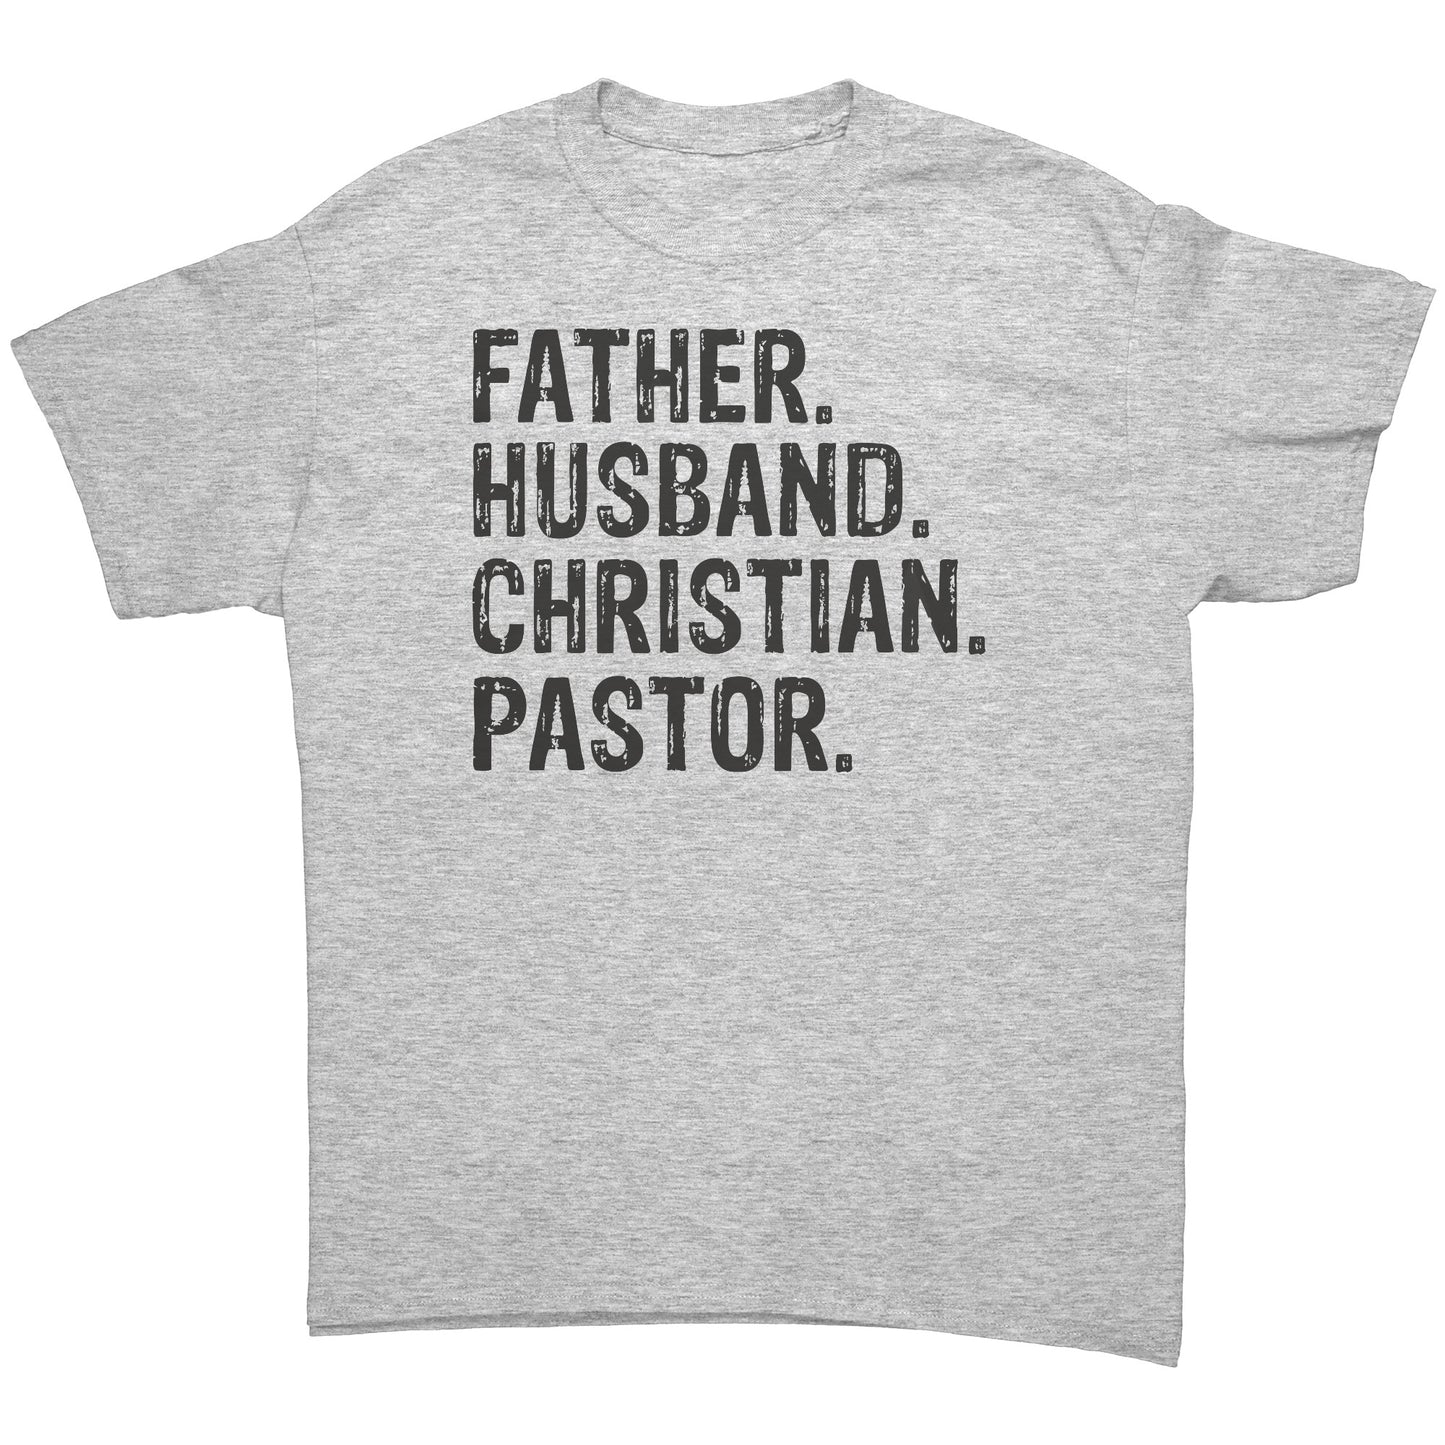 Father. Husband. Christian. Pastor Men's T-Shirt Part 1